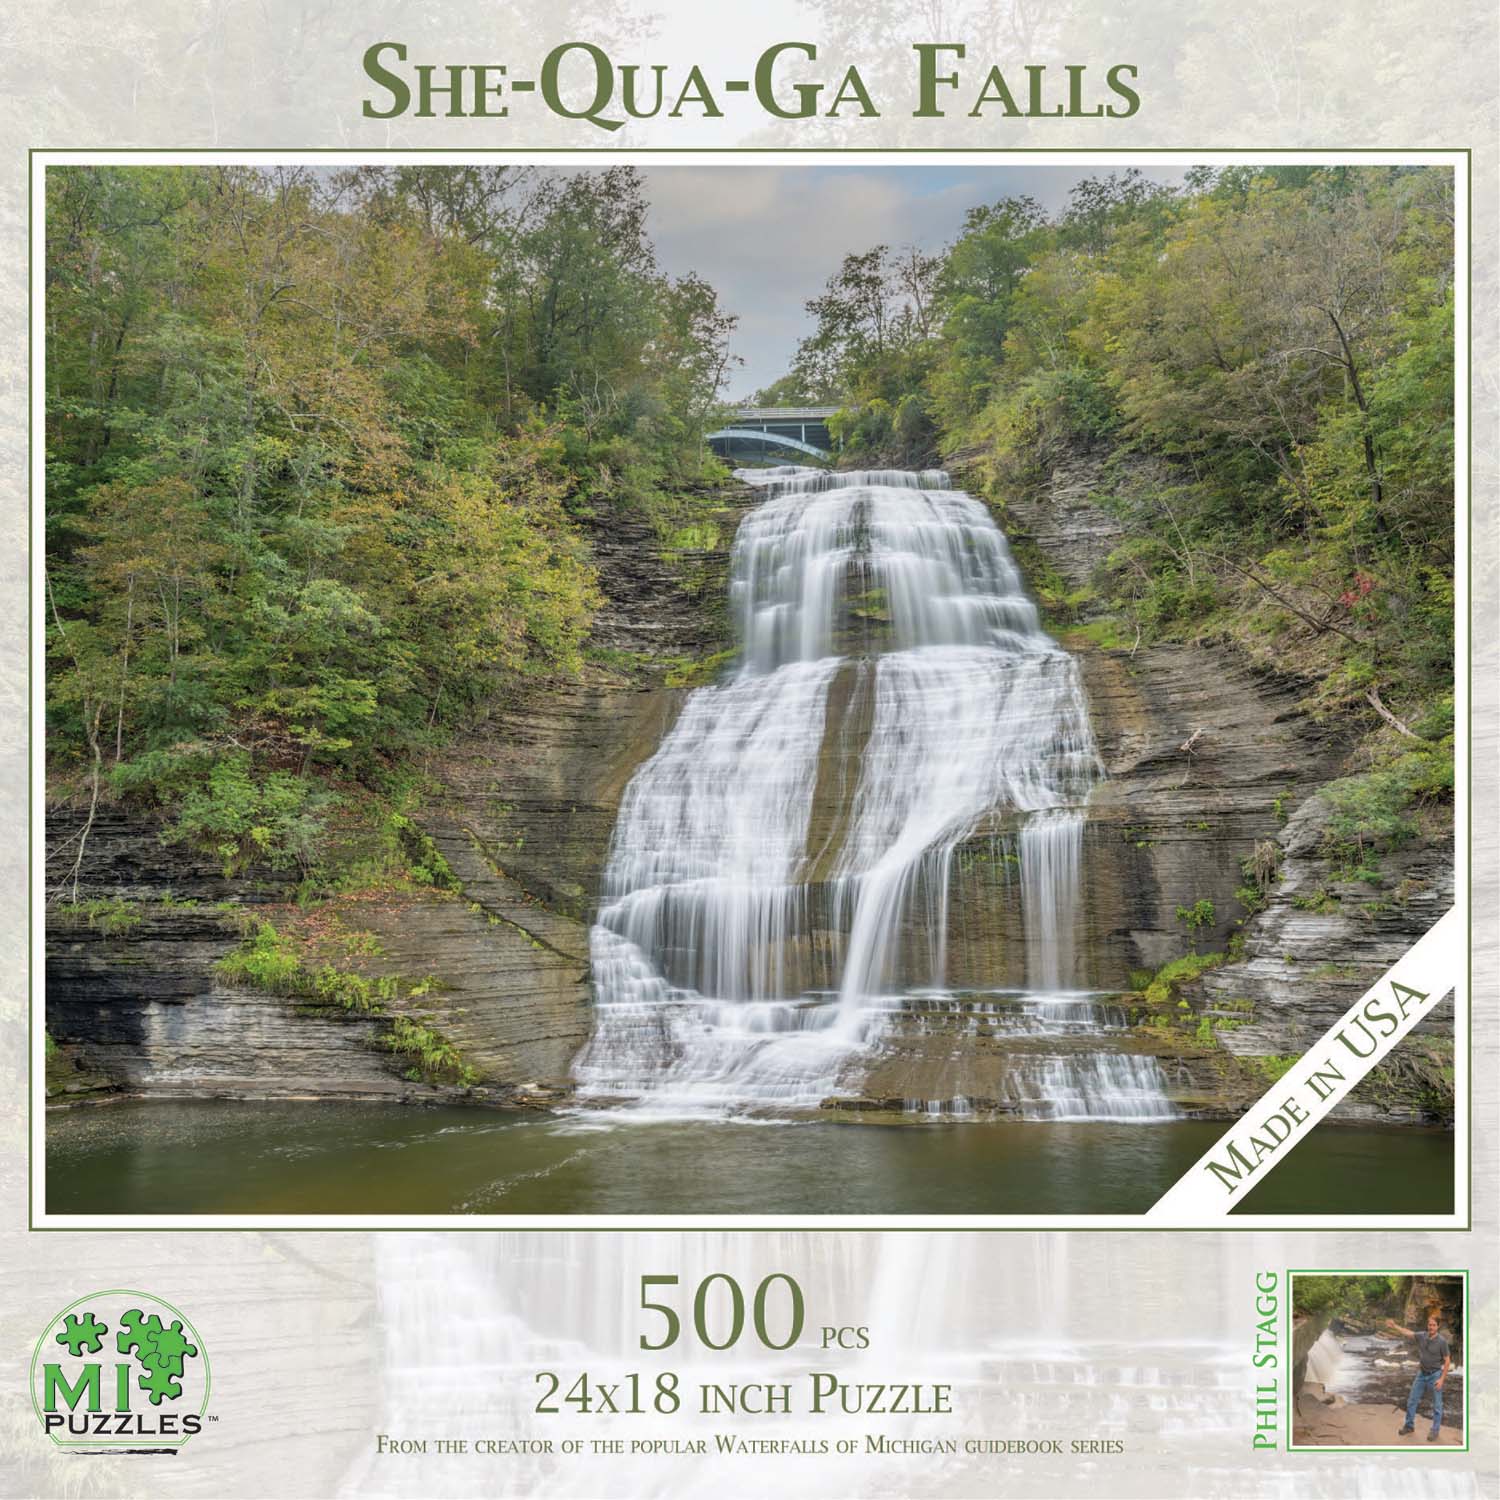 She-Qua-Ga Falls Photography Jigsaw Puzzle